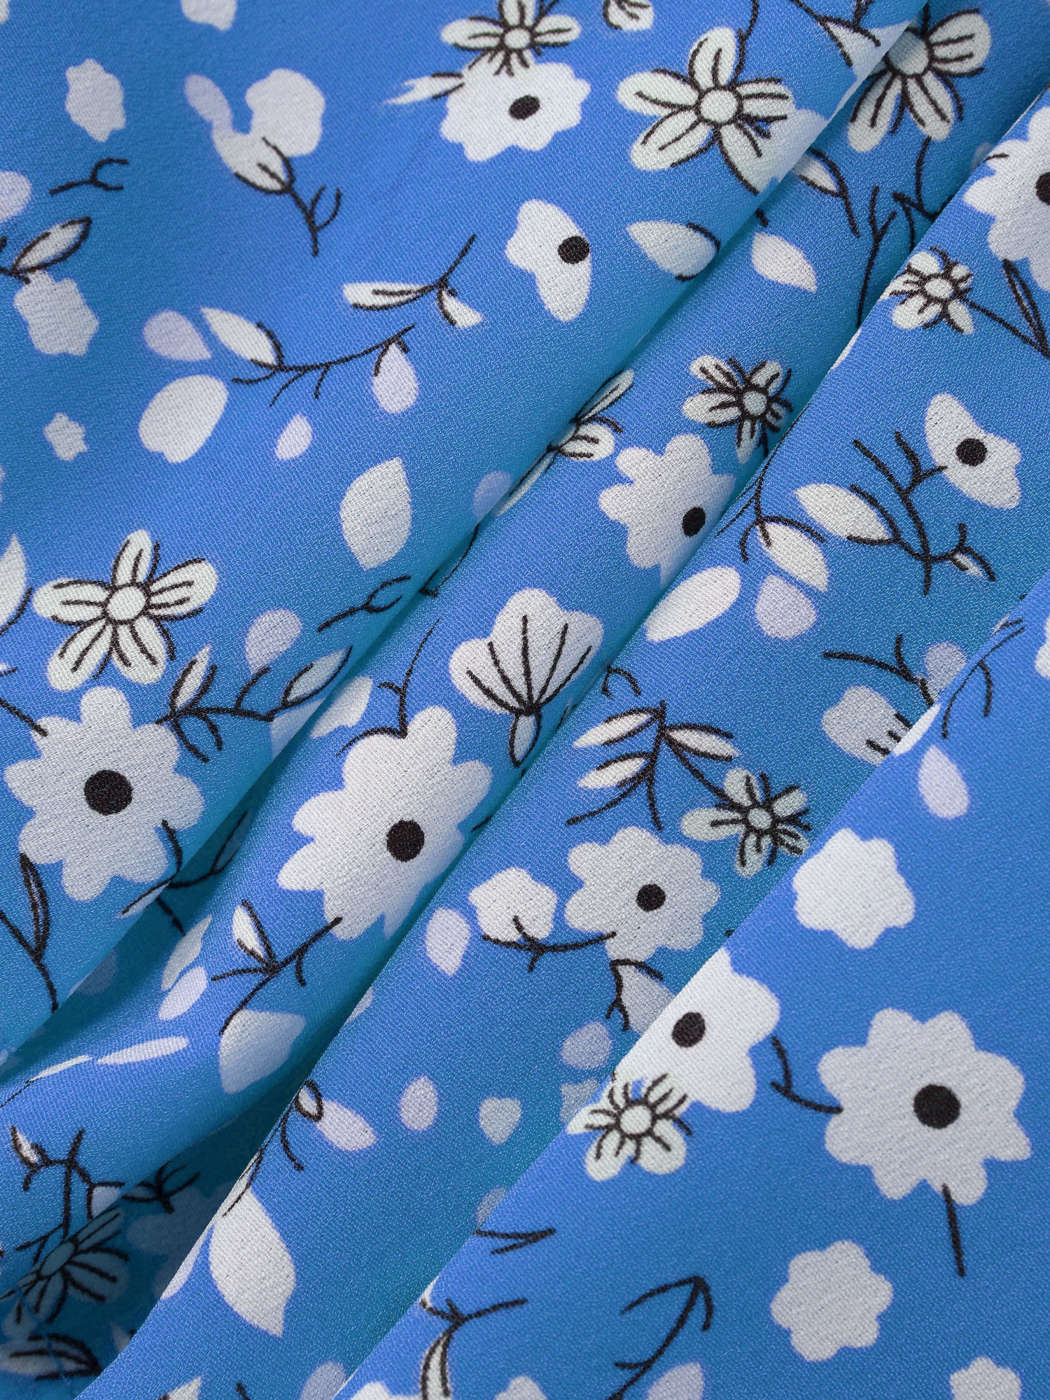 floral print summer cloth